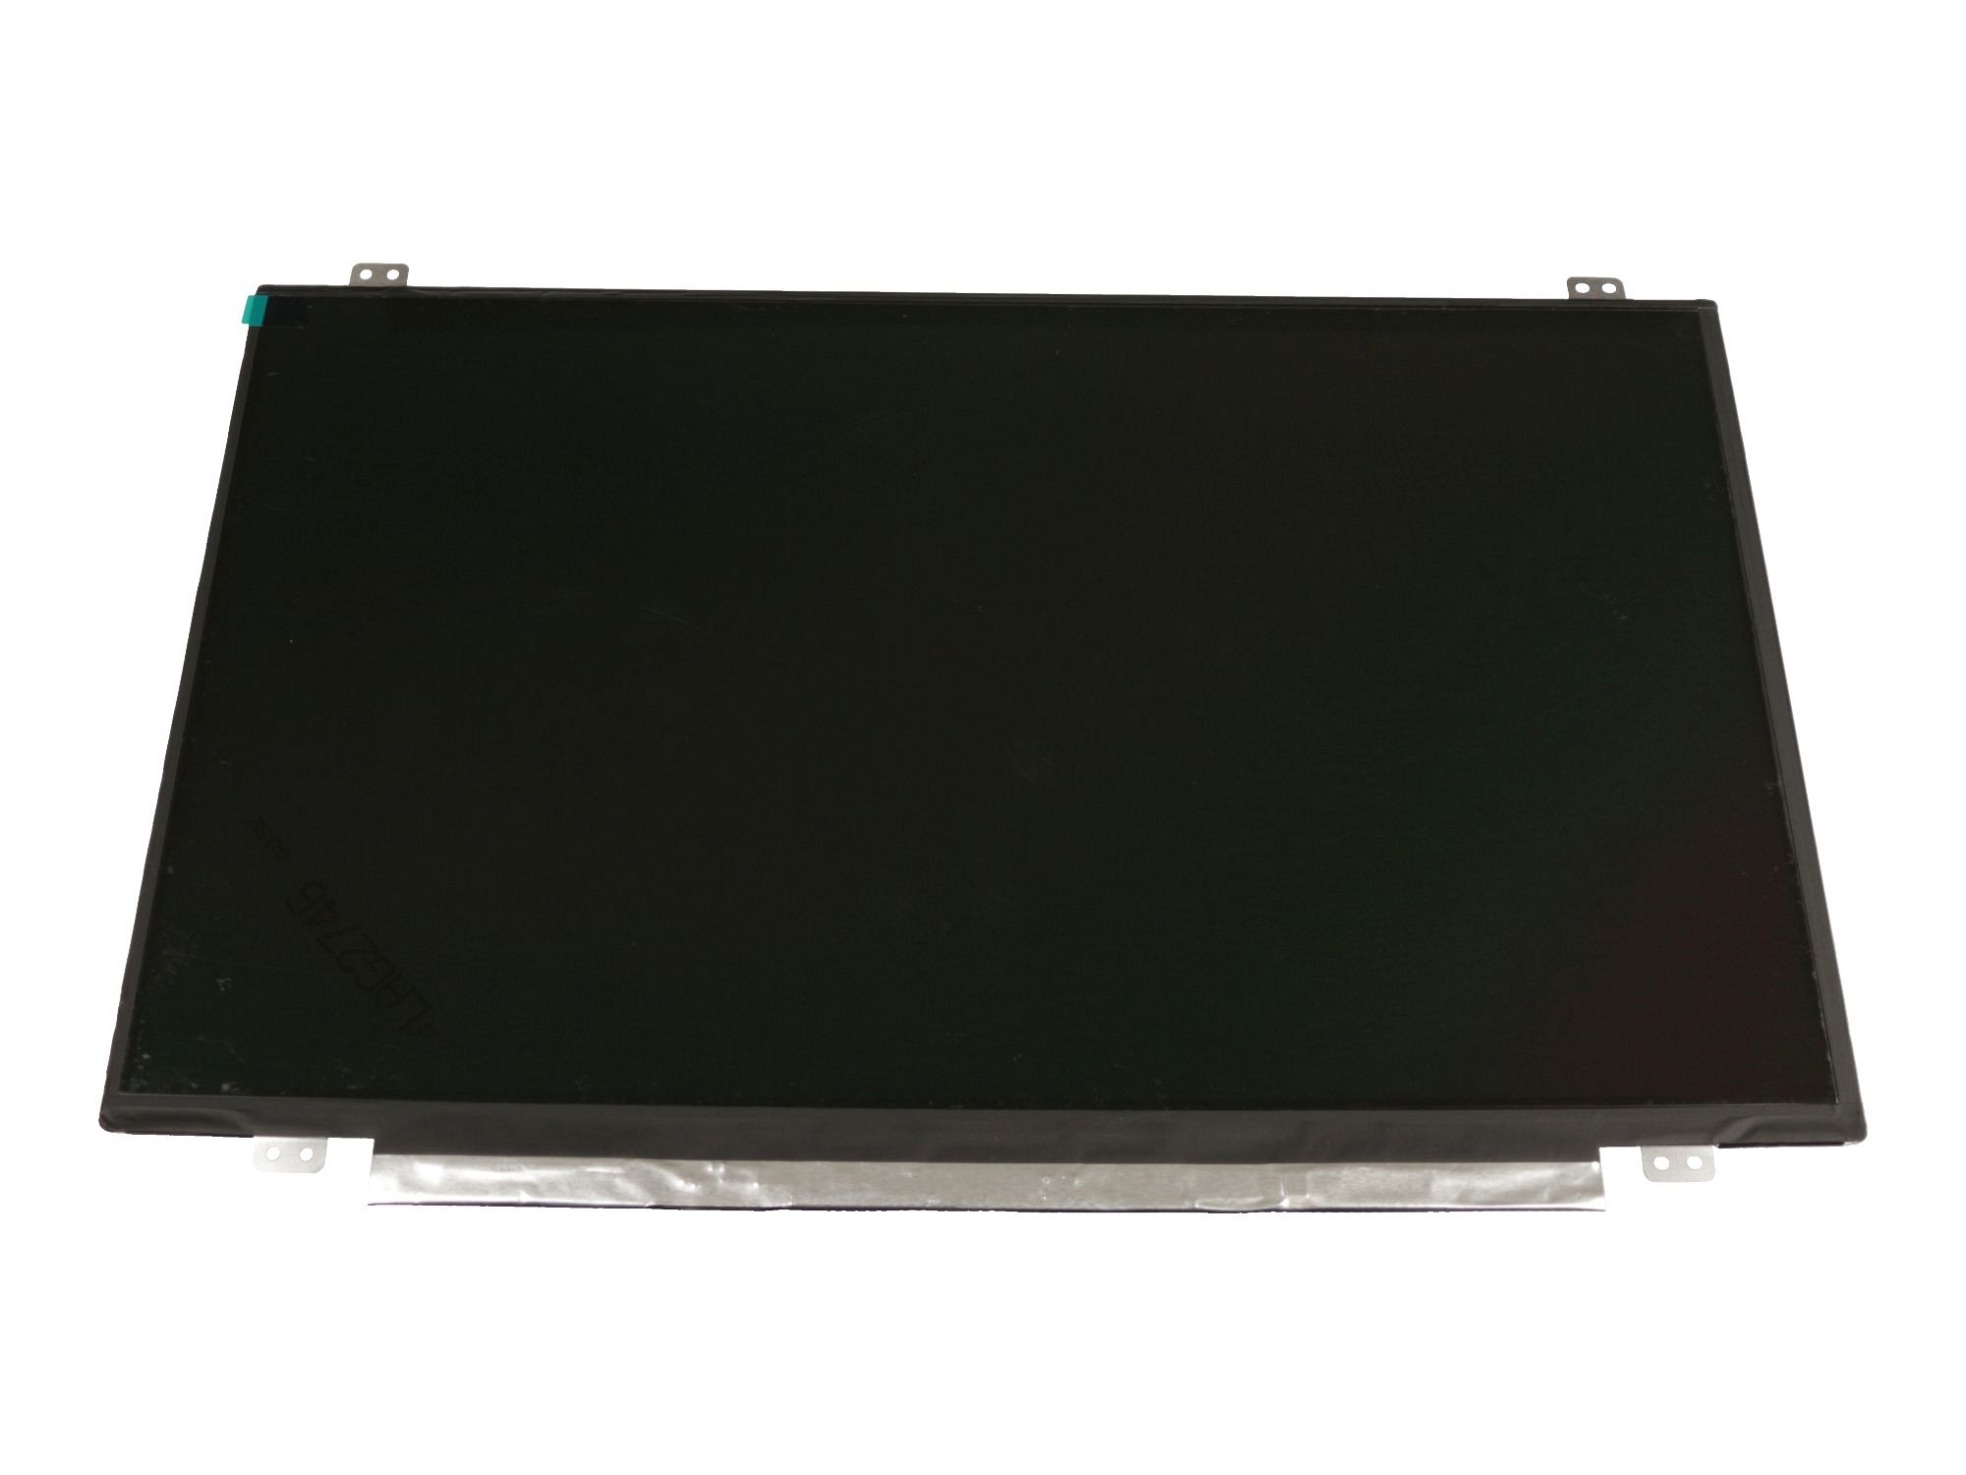 LG LP140WH8-TPH1 Display (1366x768) matt slimline